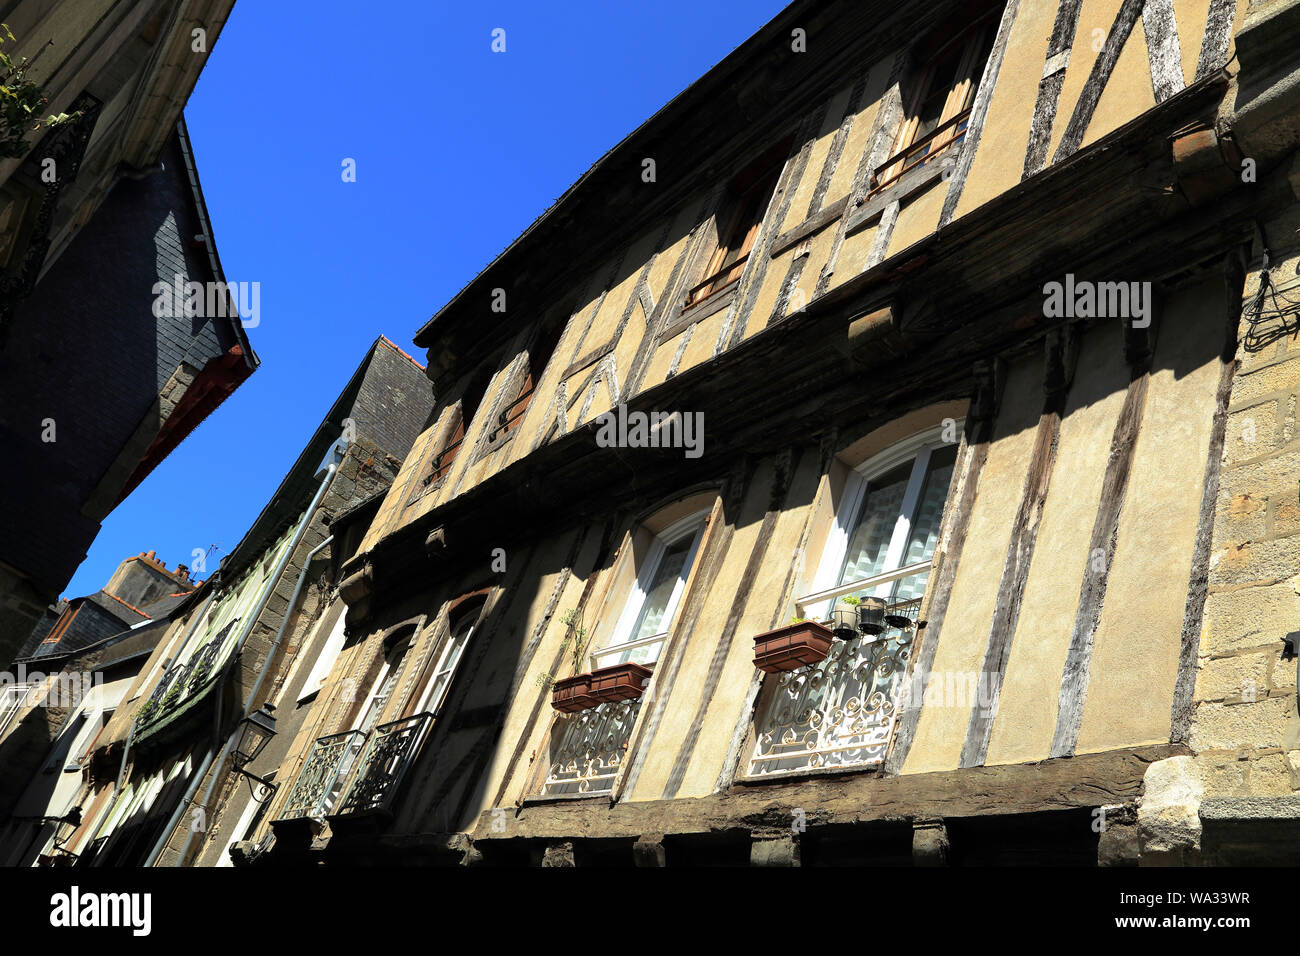 Rue saint salomon hi-res stock photography and images - Alamy